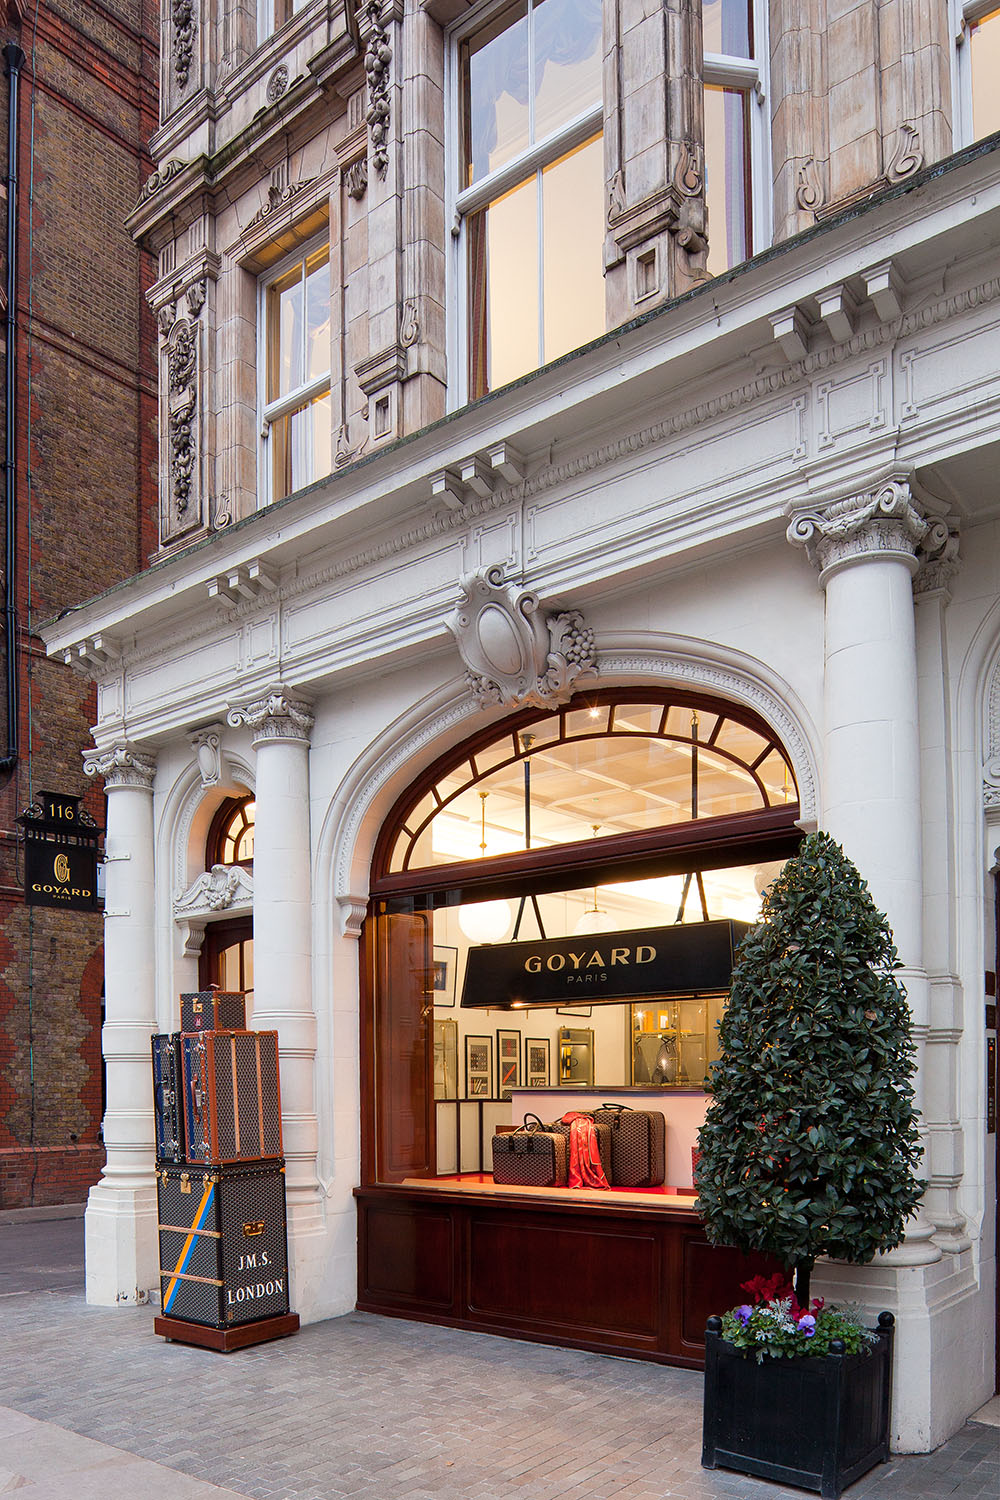 The Goyard shop in Carlos Place,London, such a beautiful building.